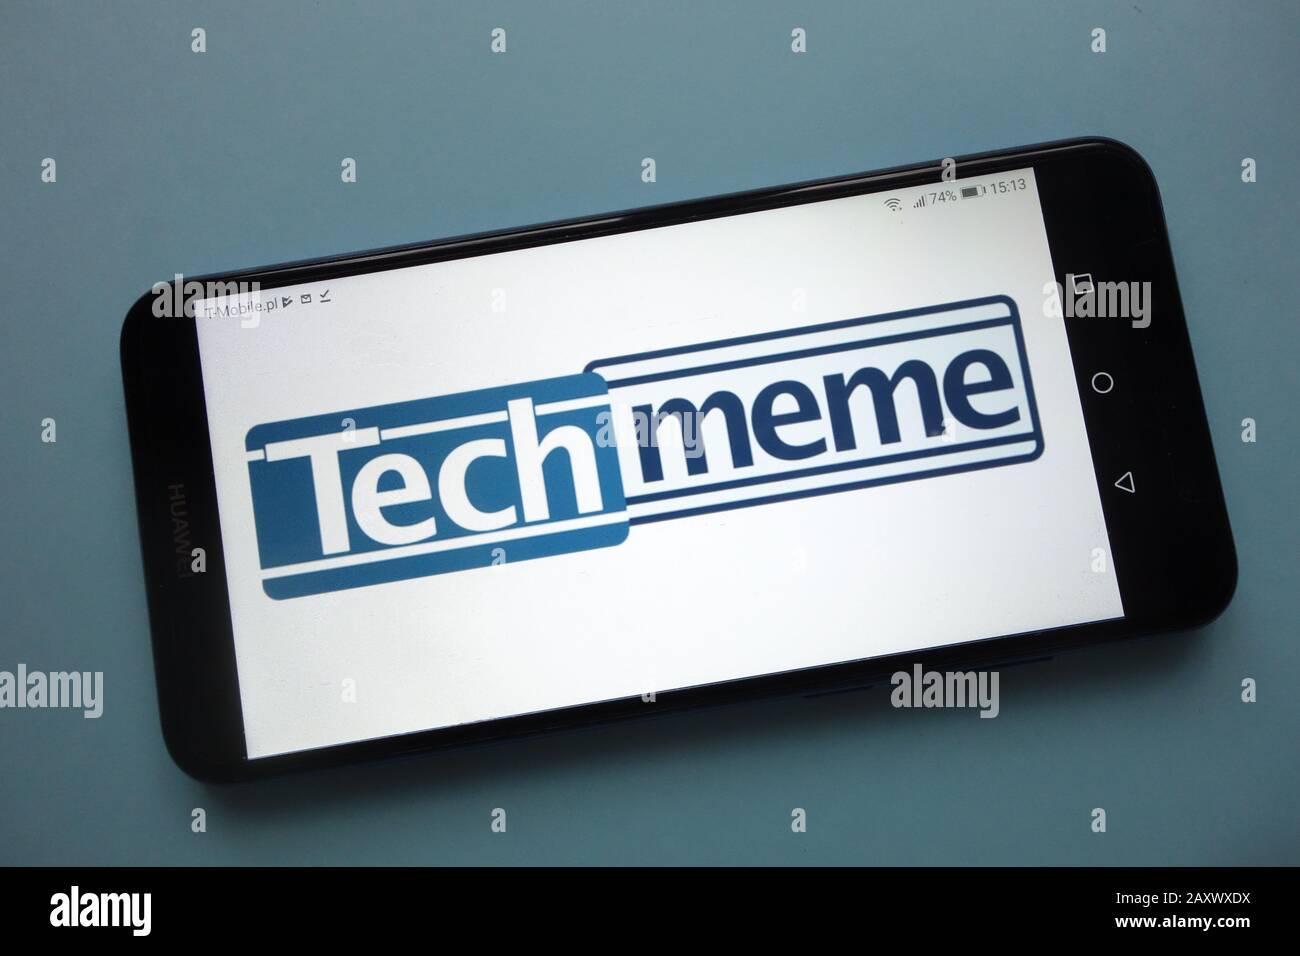 Techmeme logo displayed on smartphone Stock Photo